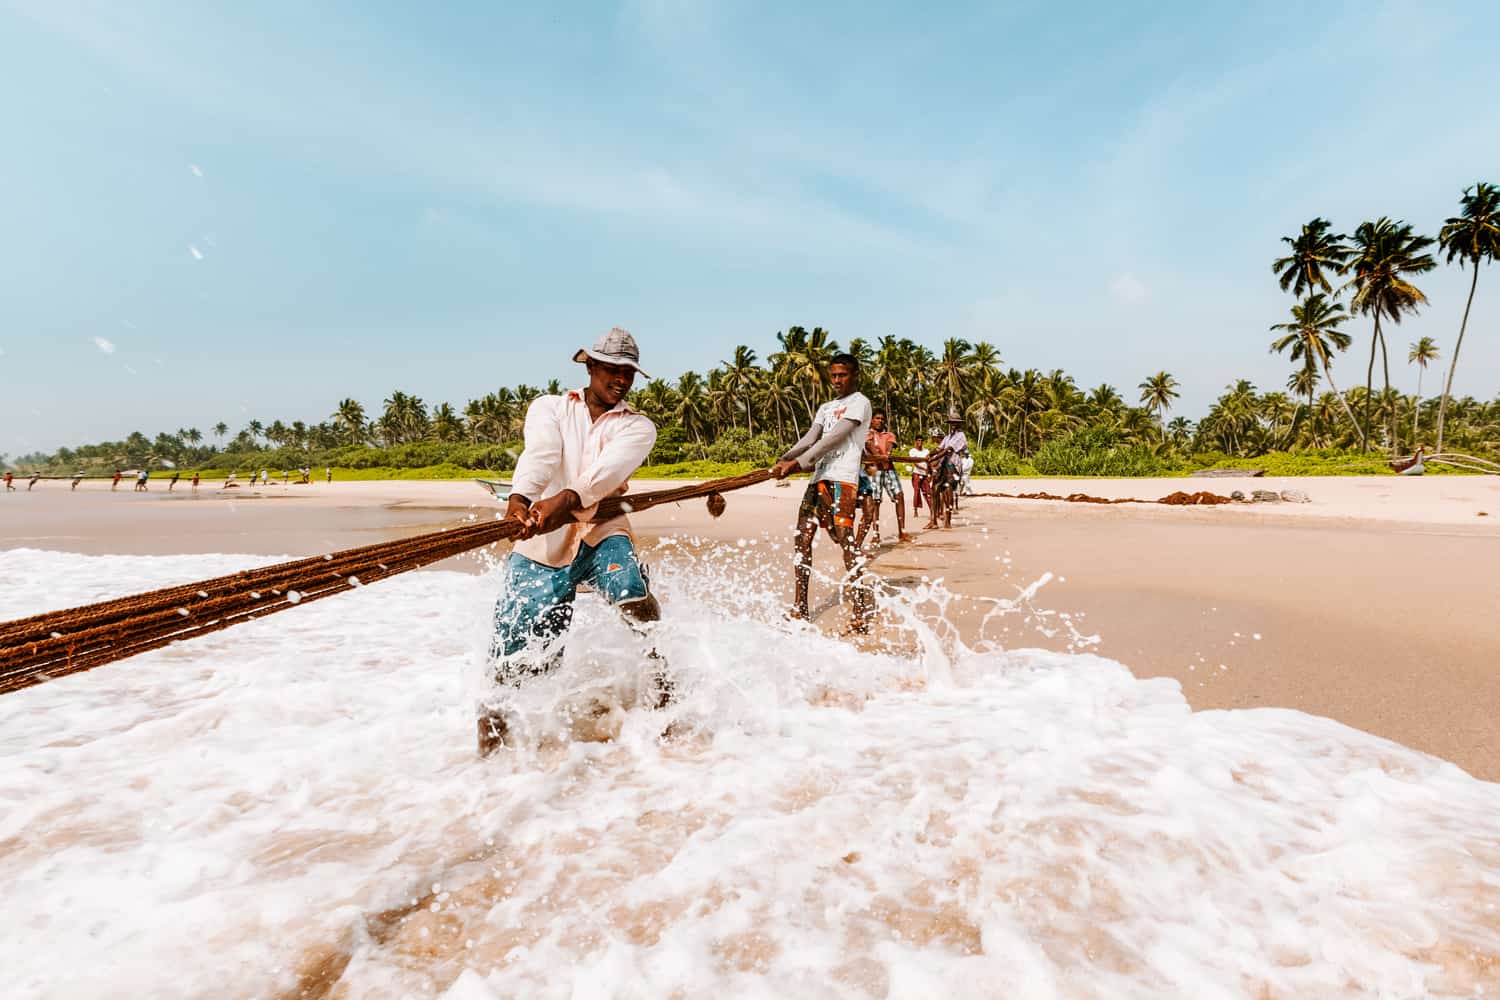 Fishermen in Negombo